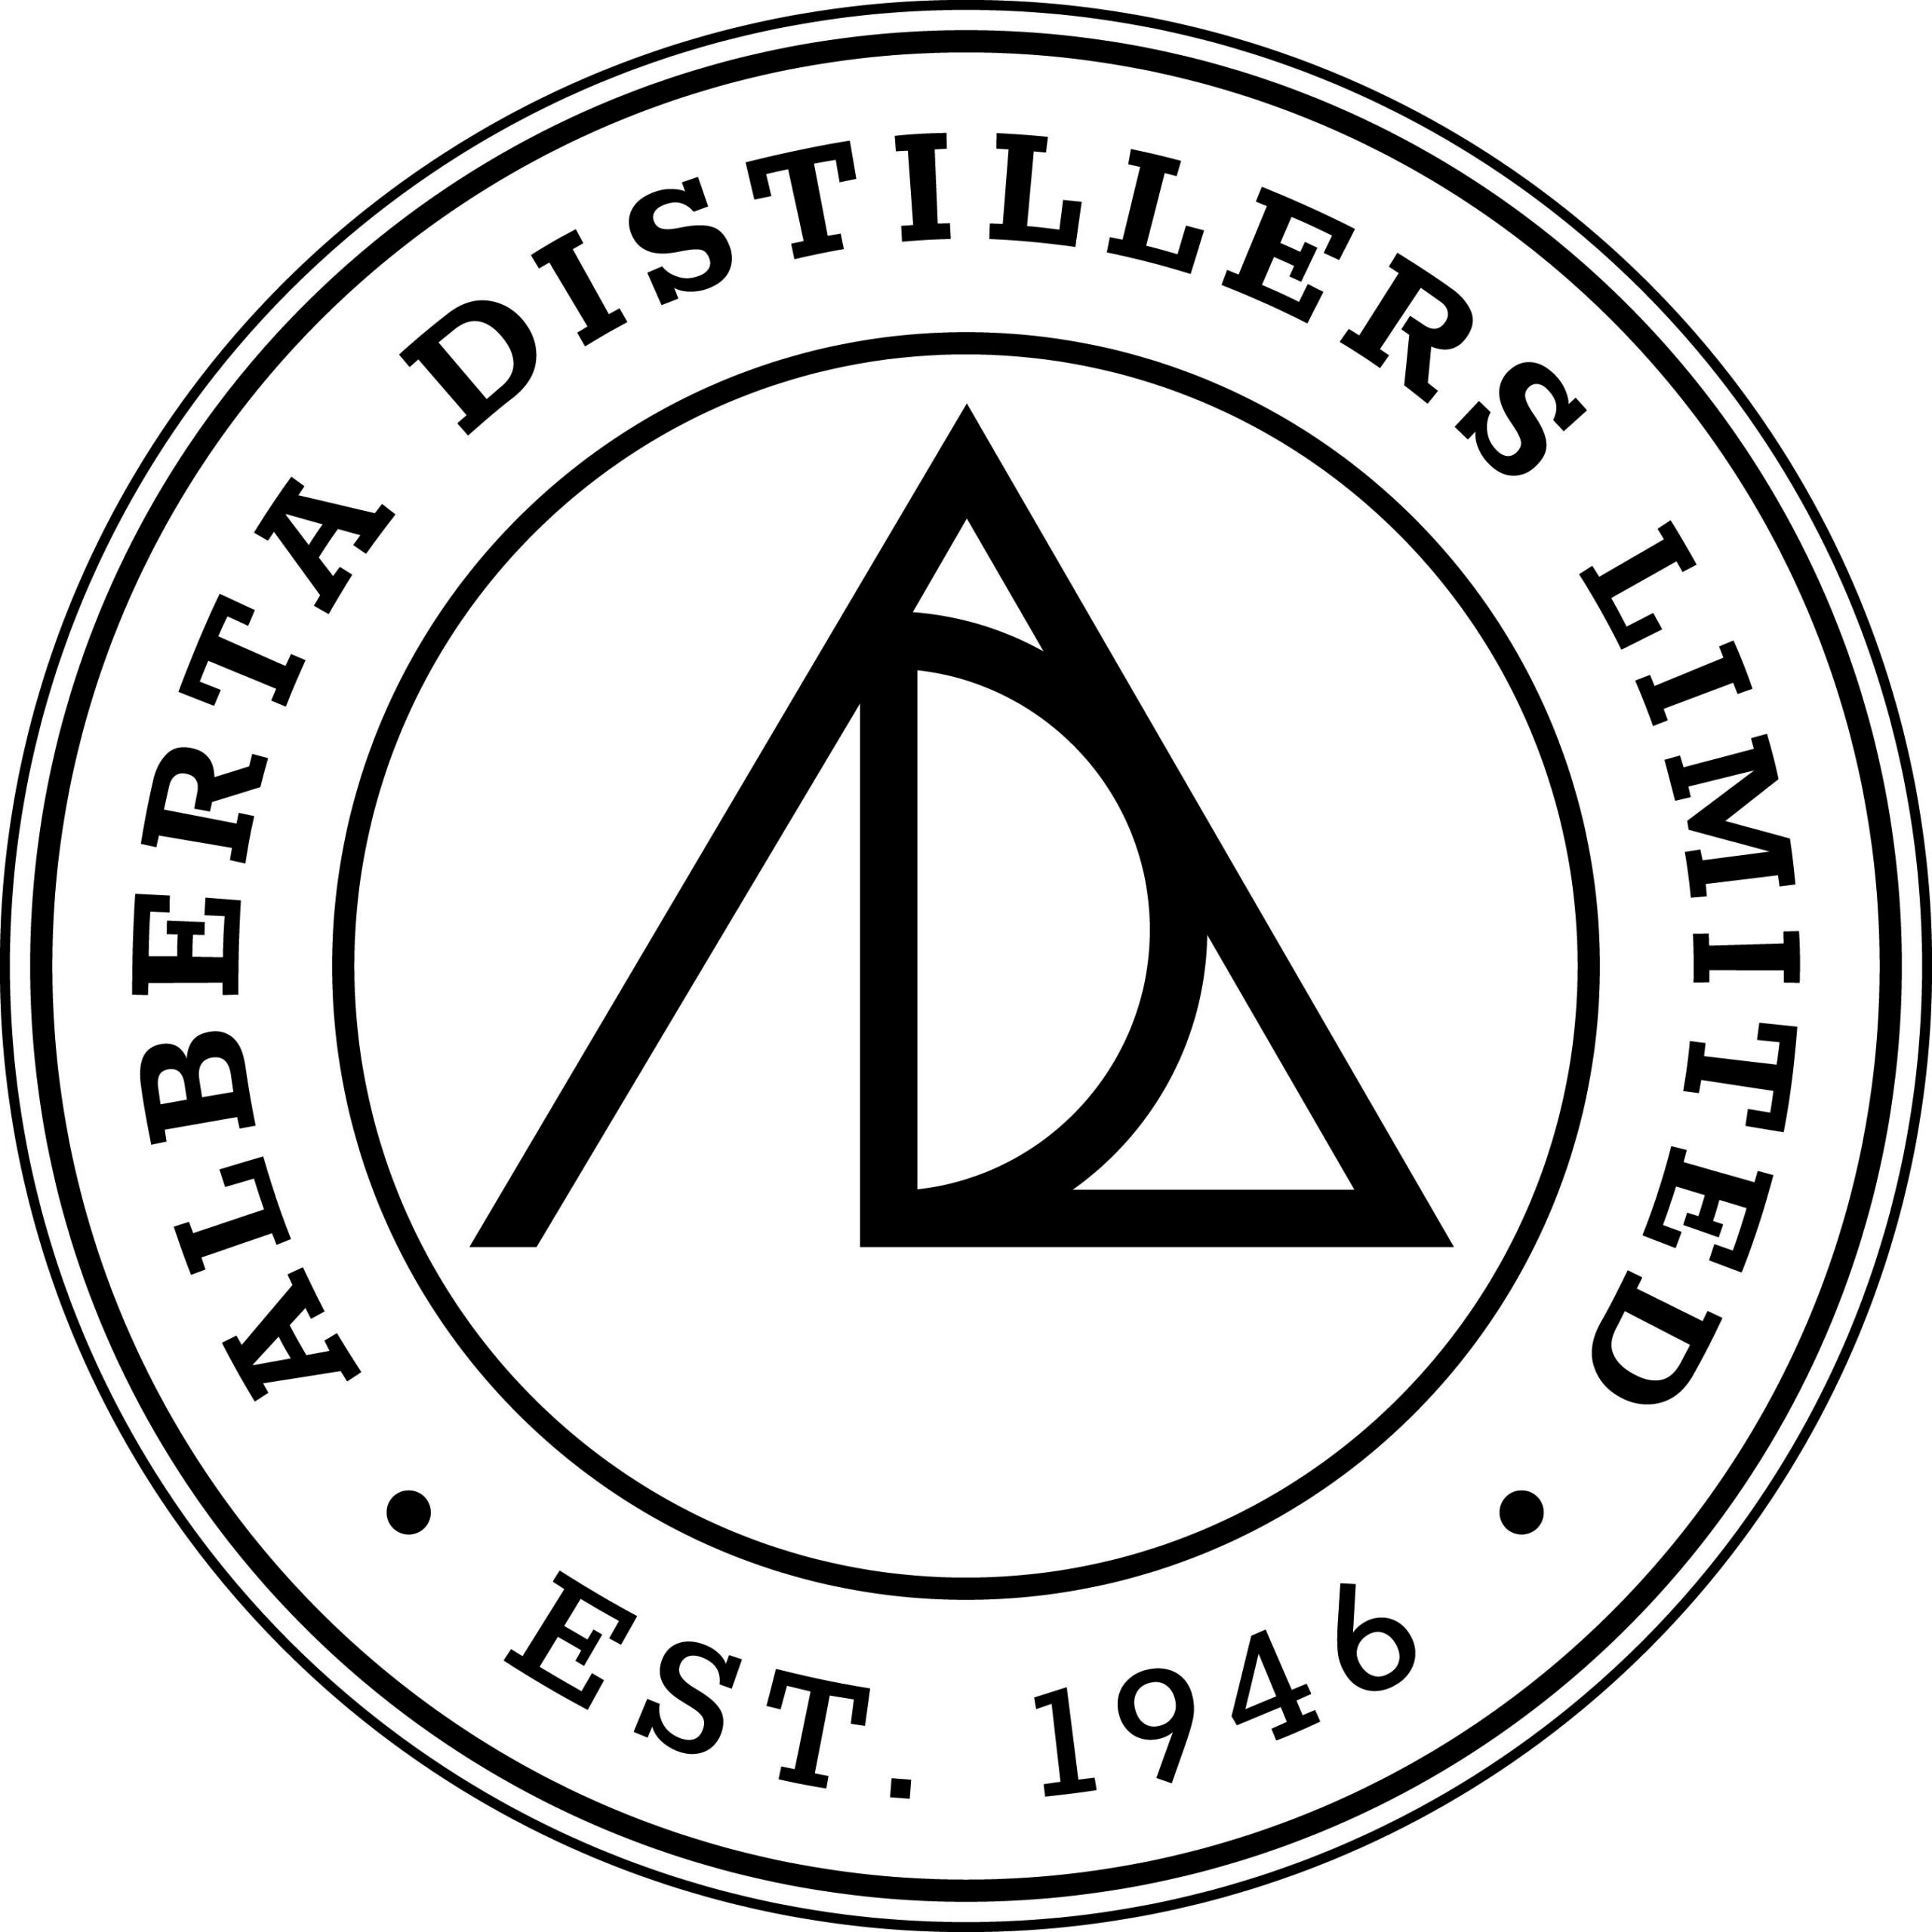 Alberta Distillers